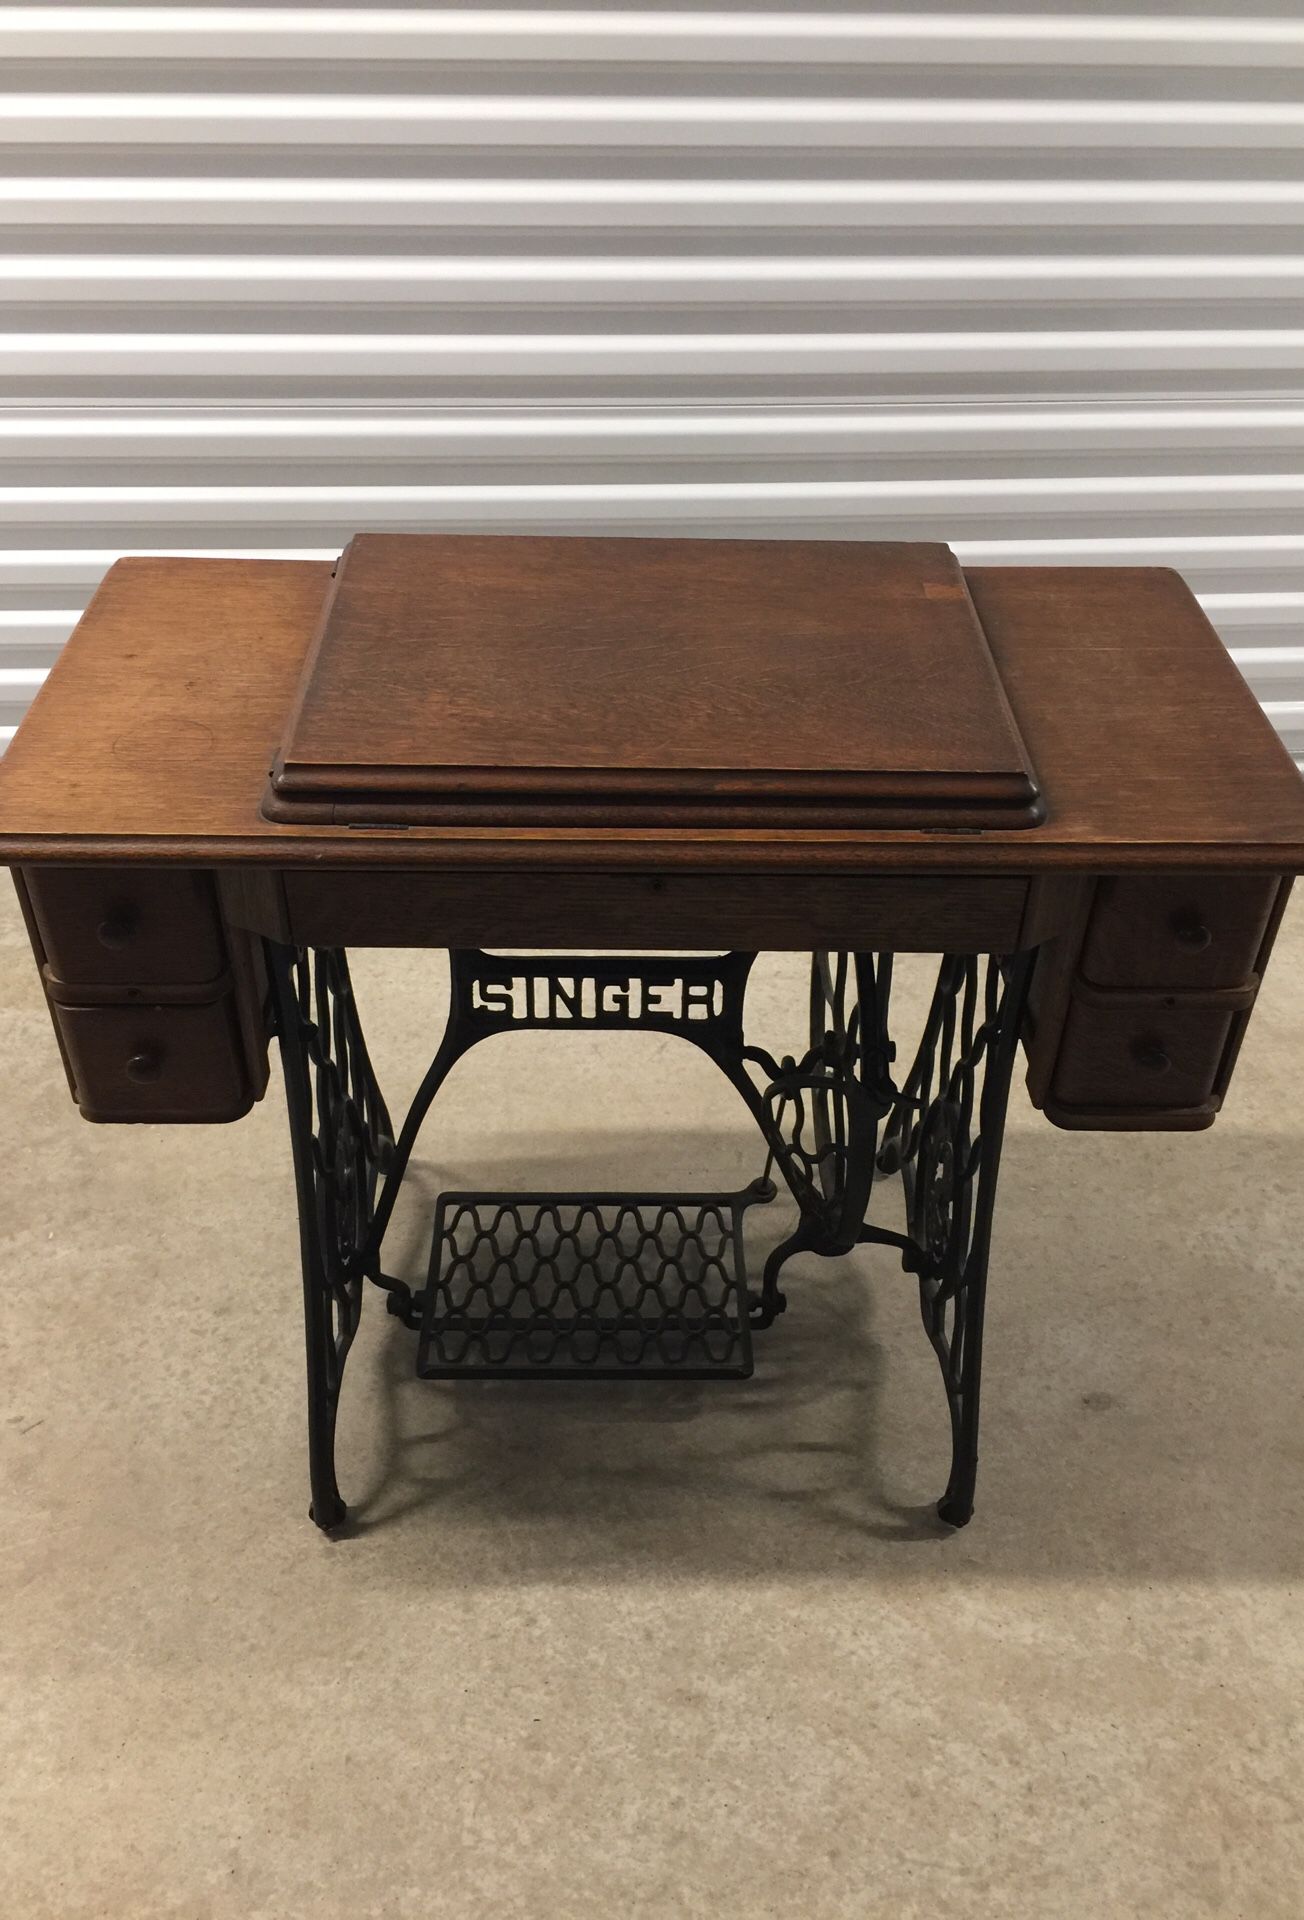 Antique Singer sewing machine cabinet